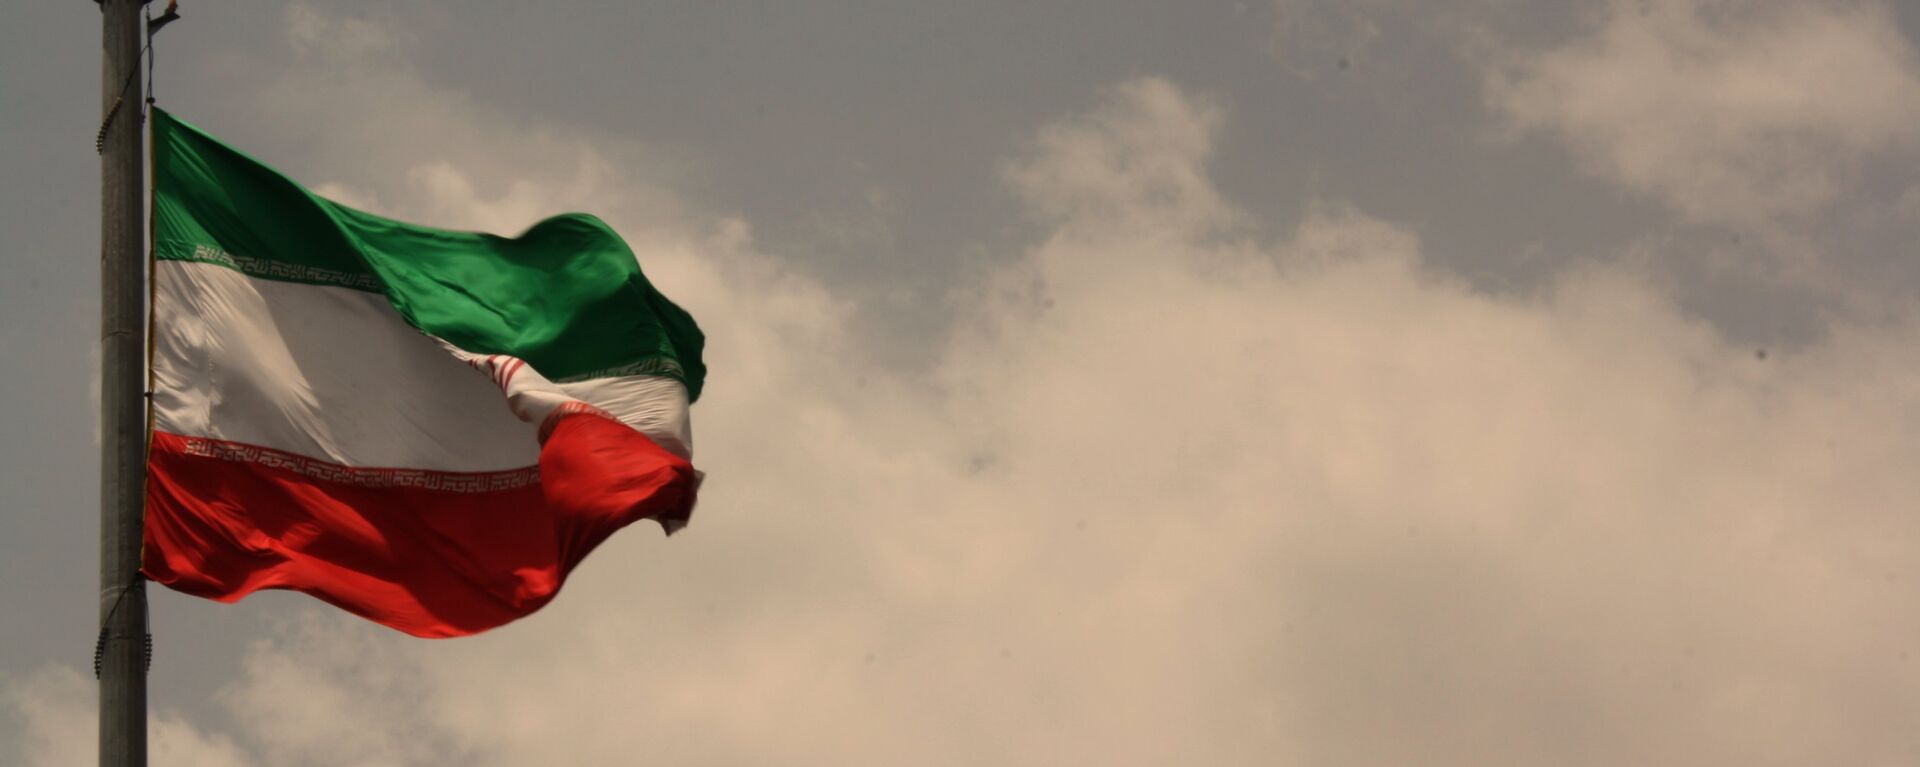 La bandera de Irán - Sputnik Mundo, 1920, 08.02.2021